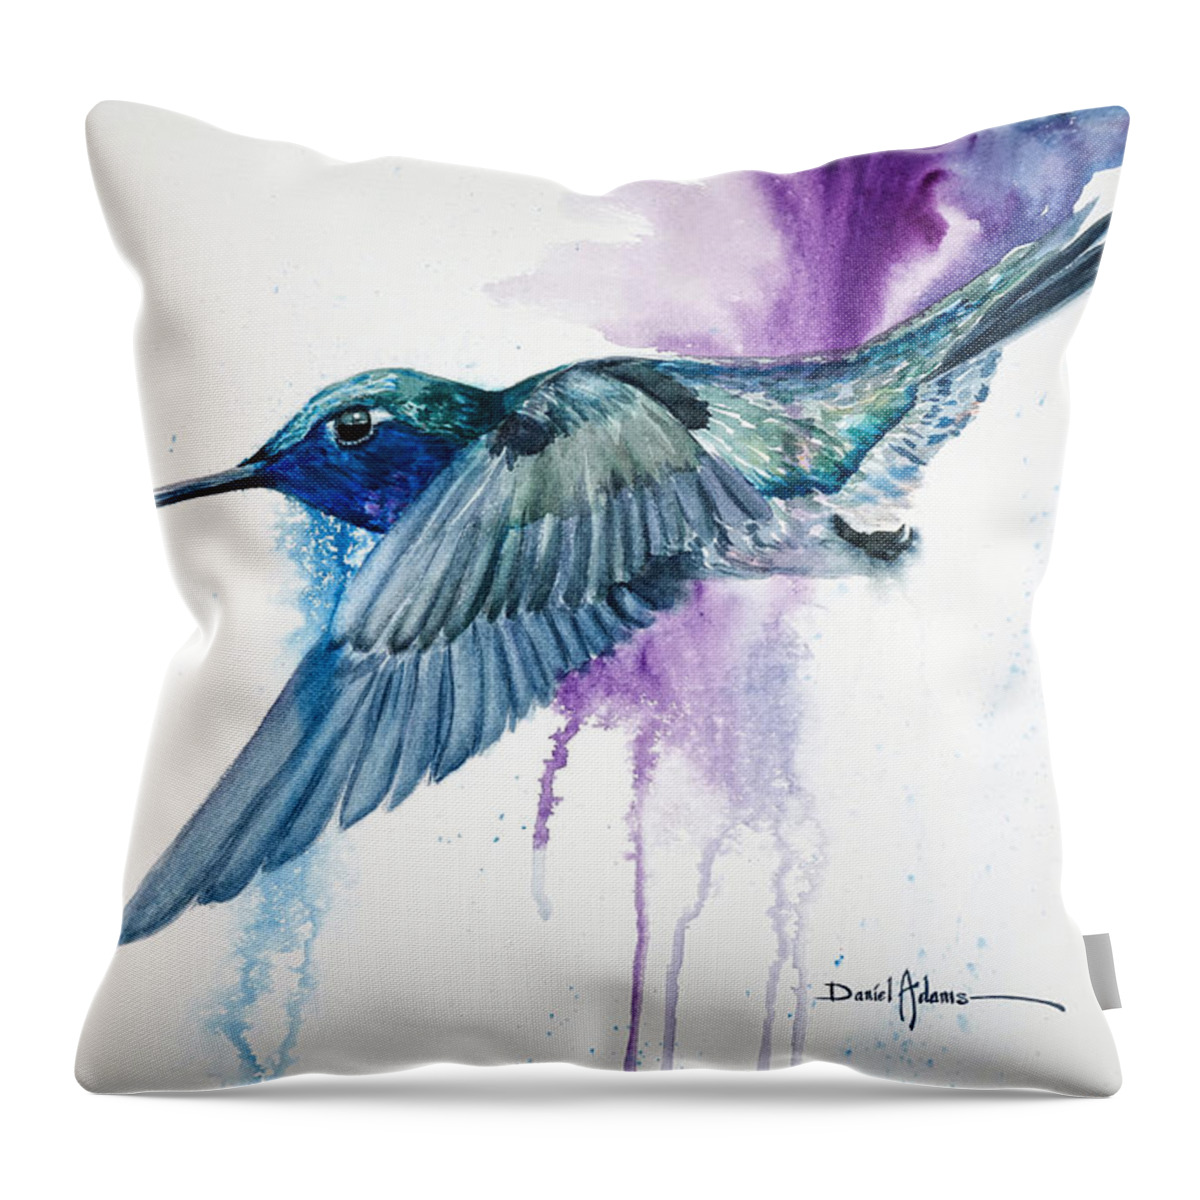 Hummingbird Throw Pillow featuring the painting Purple Haze Daniel Adams by Daniel Adams